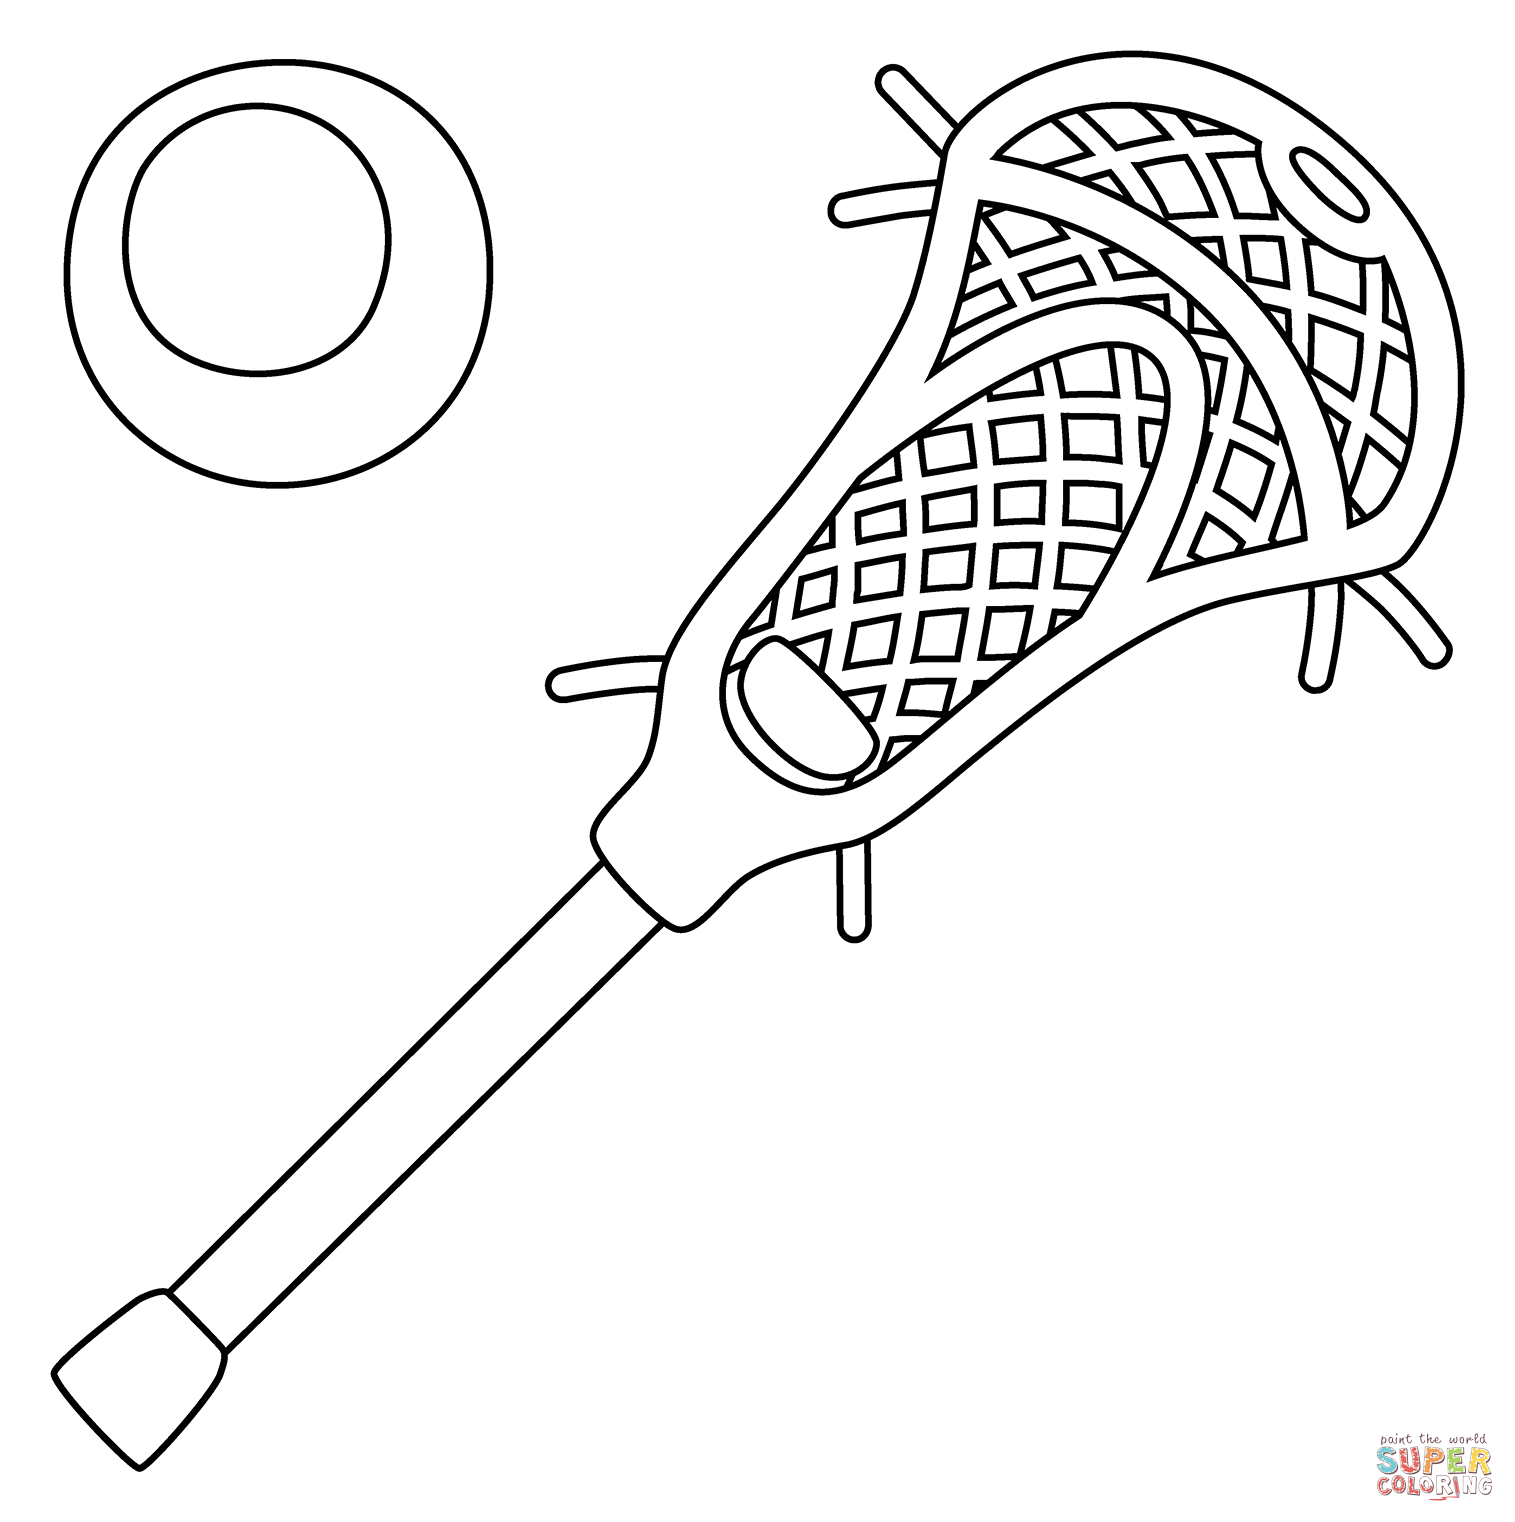 Lacrosse emoji coloring page free printable coloring pages